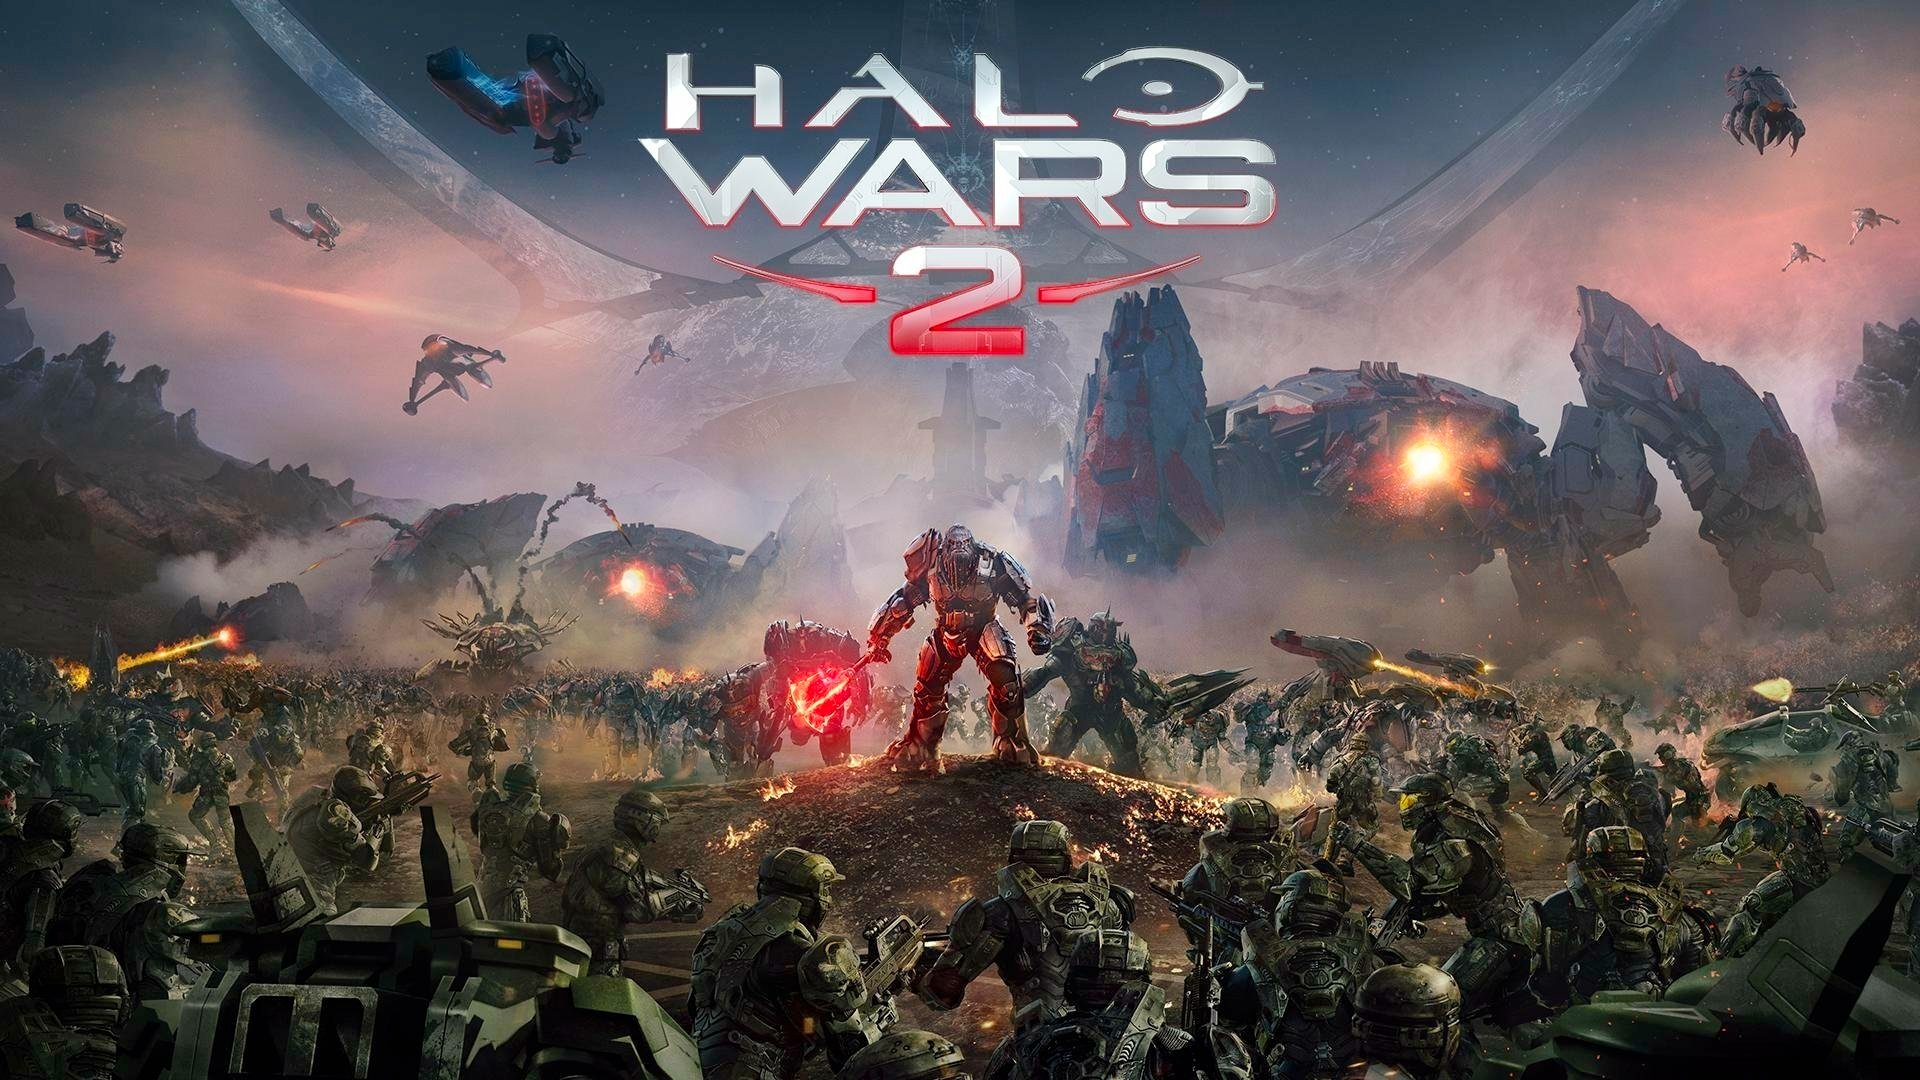 Buy Halo 4 - Microsoft Store en-IS